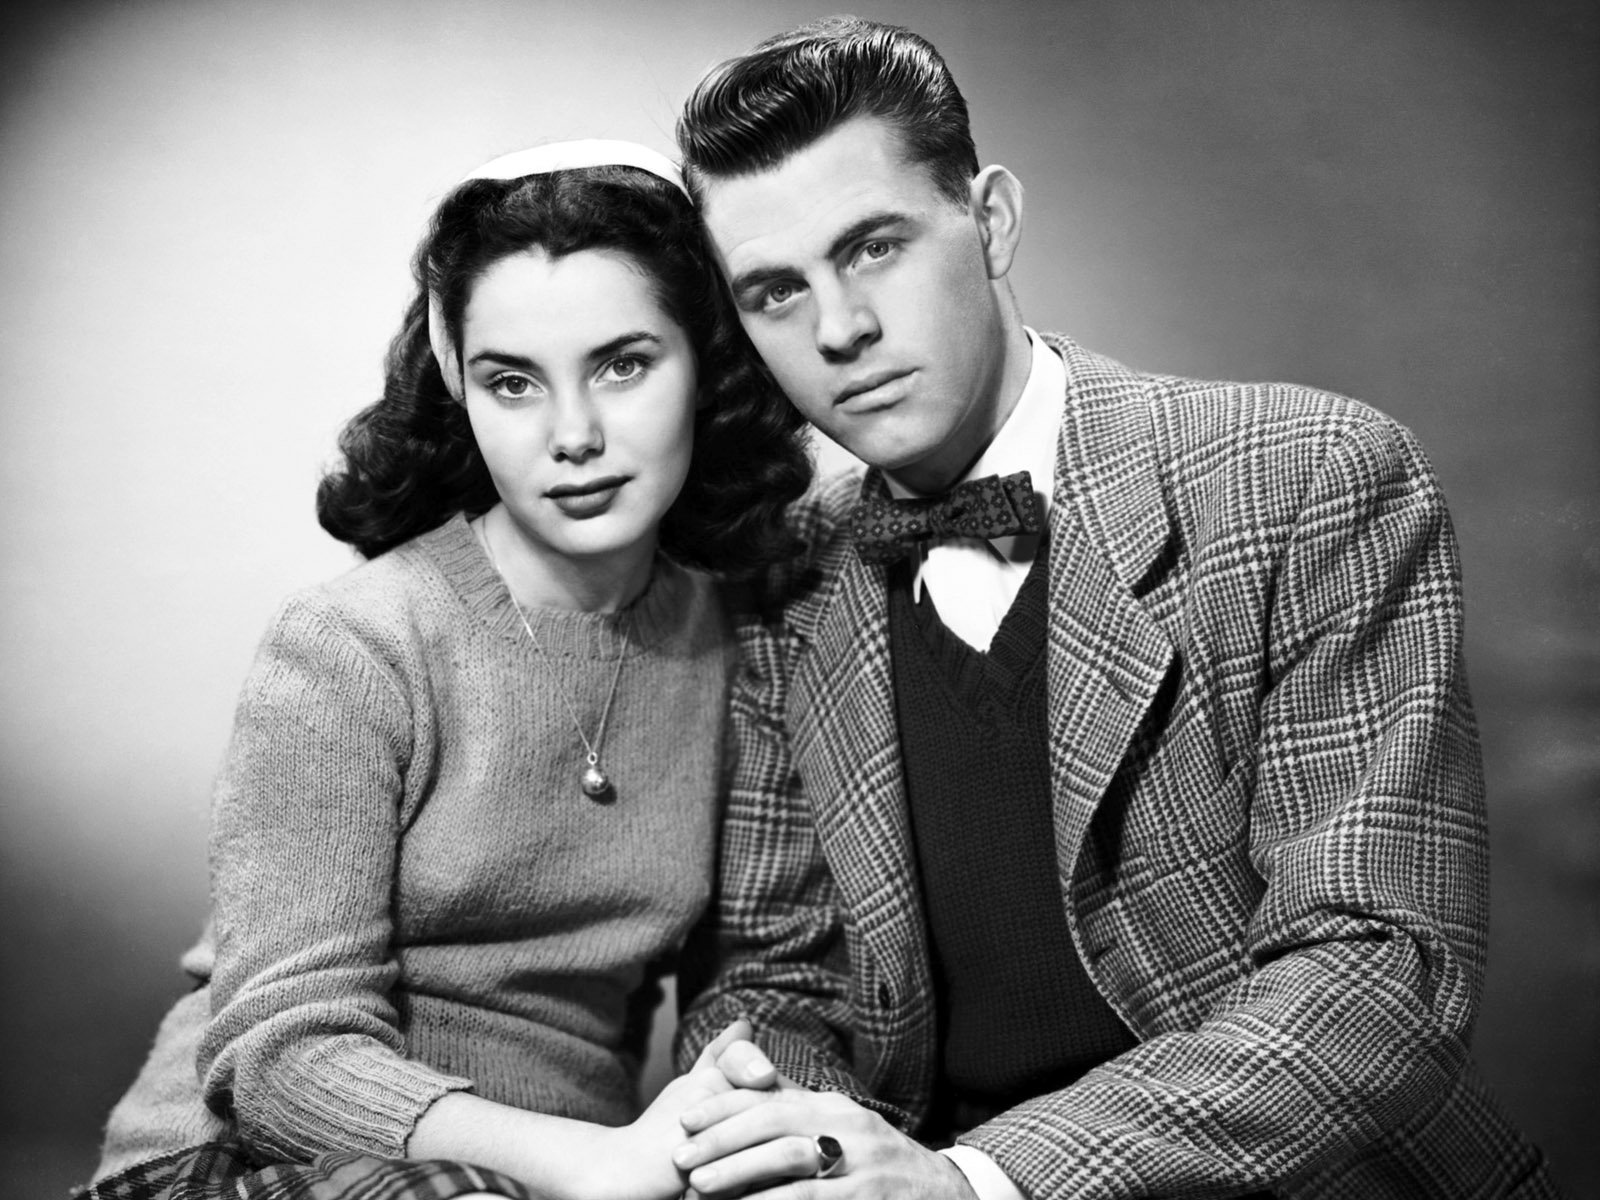 Пар 50 история. Пары в стиле ретро. Мужчина и женщина ретро. Фотопортрет в стиле ретро. Фотосессия в стиле 50-х годов.